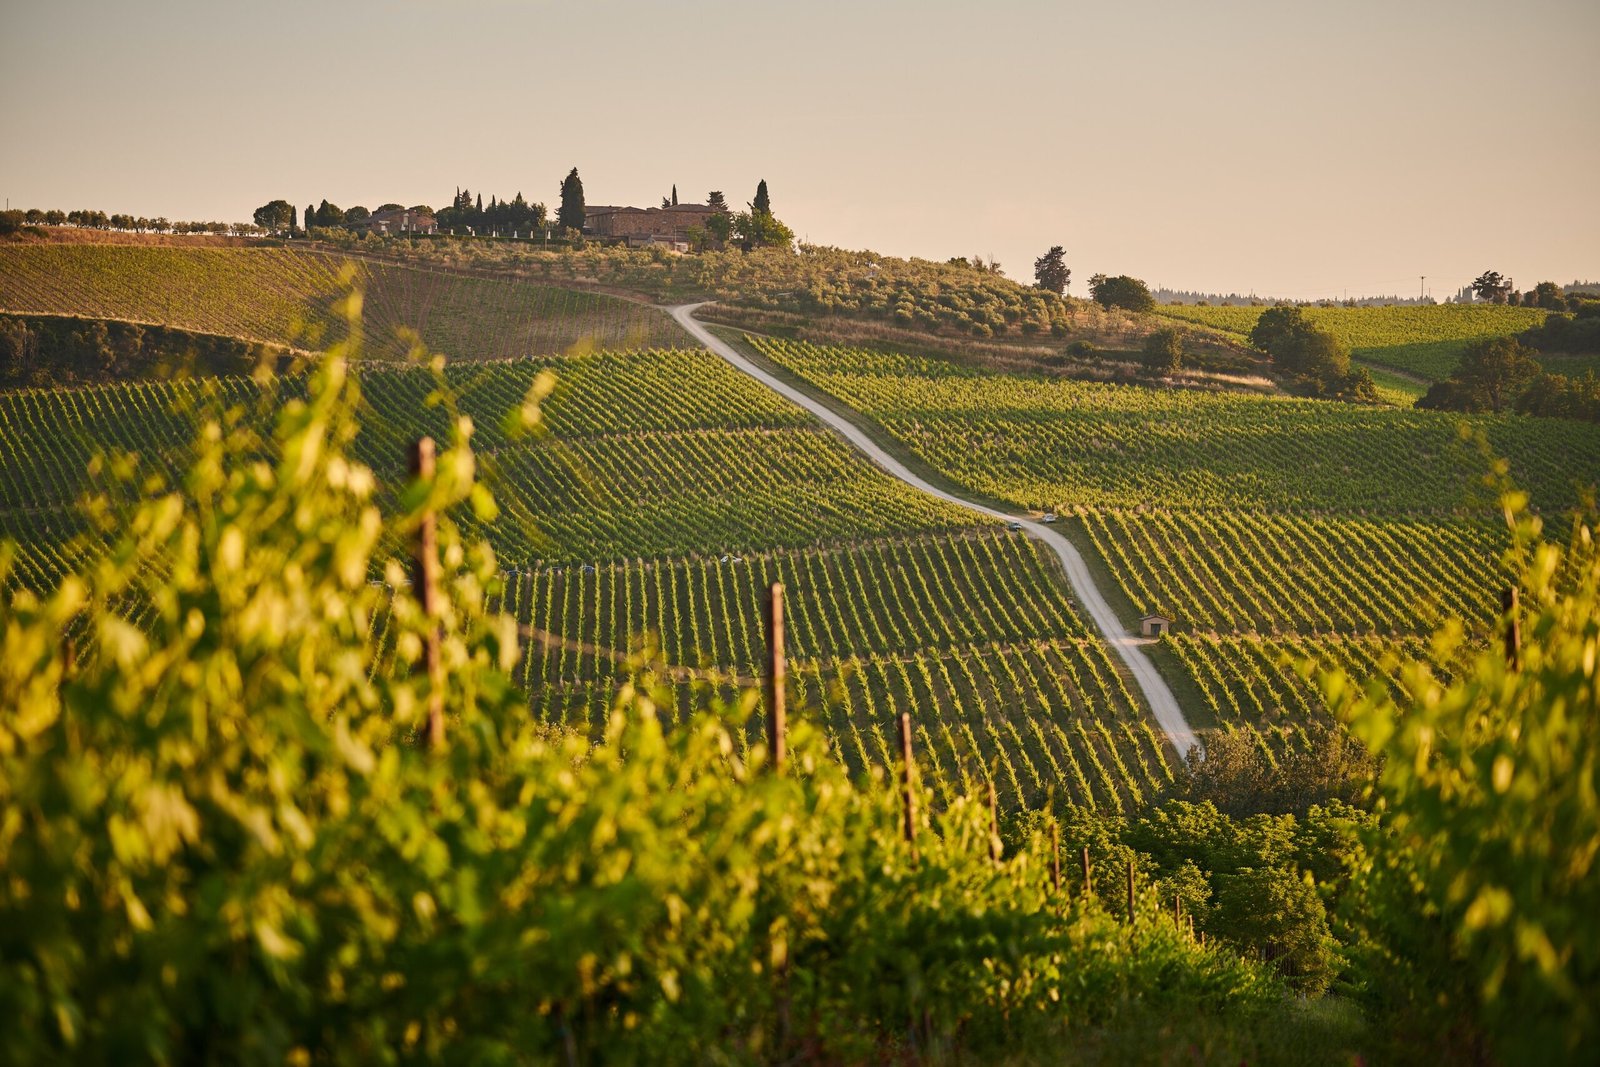 A sweeping landscape shot of a vineyard over rolling hills at sunset